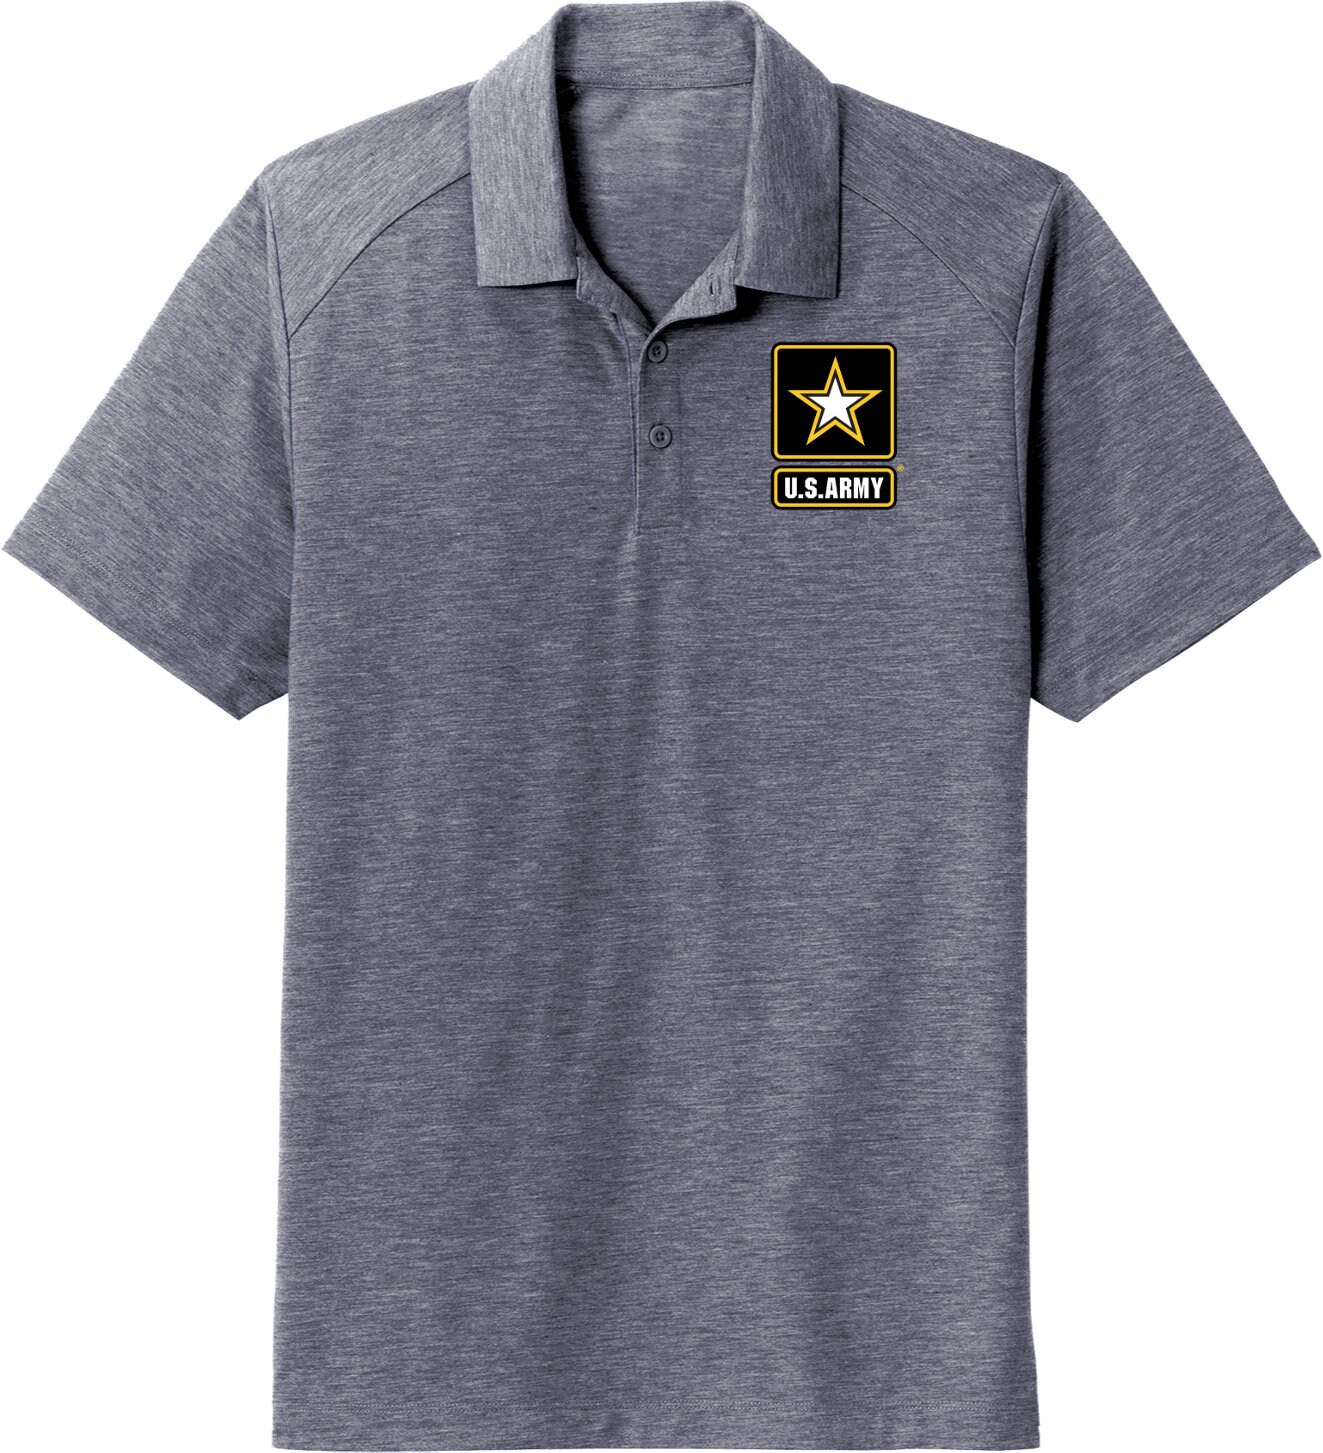 Us Army Pocket Print Men's Tri-Blend Wicking Polo Shirt Army-Pp-st405